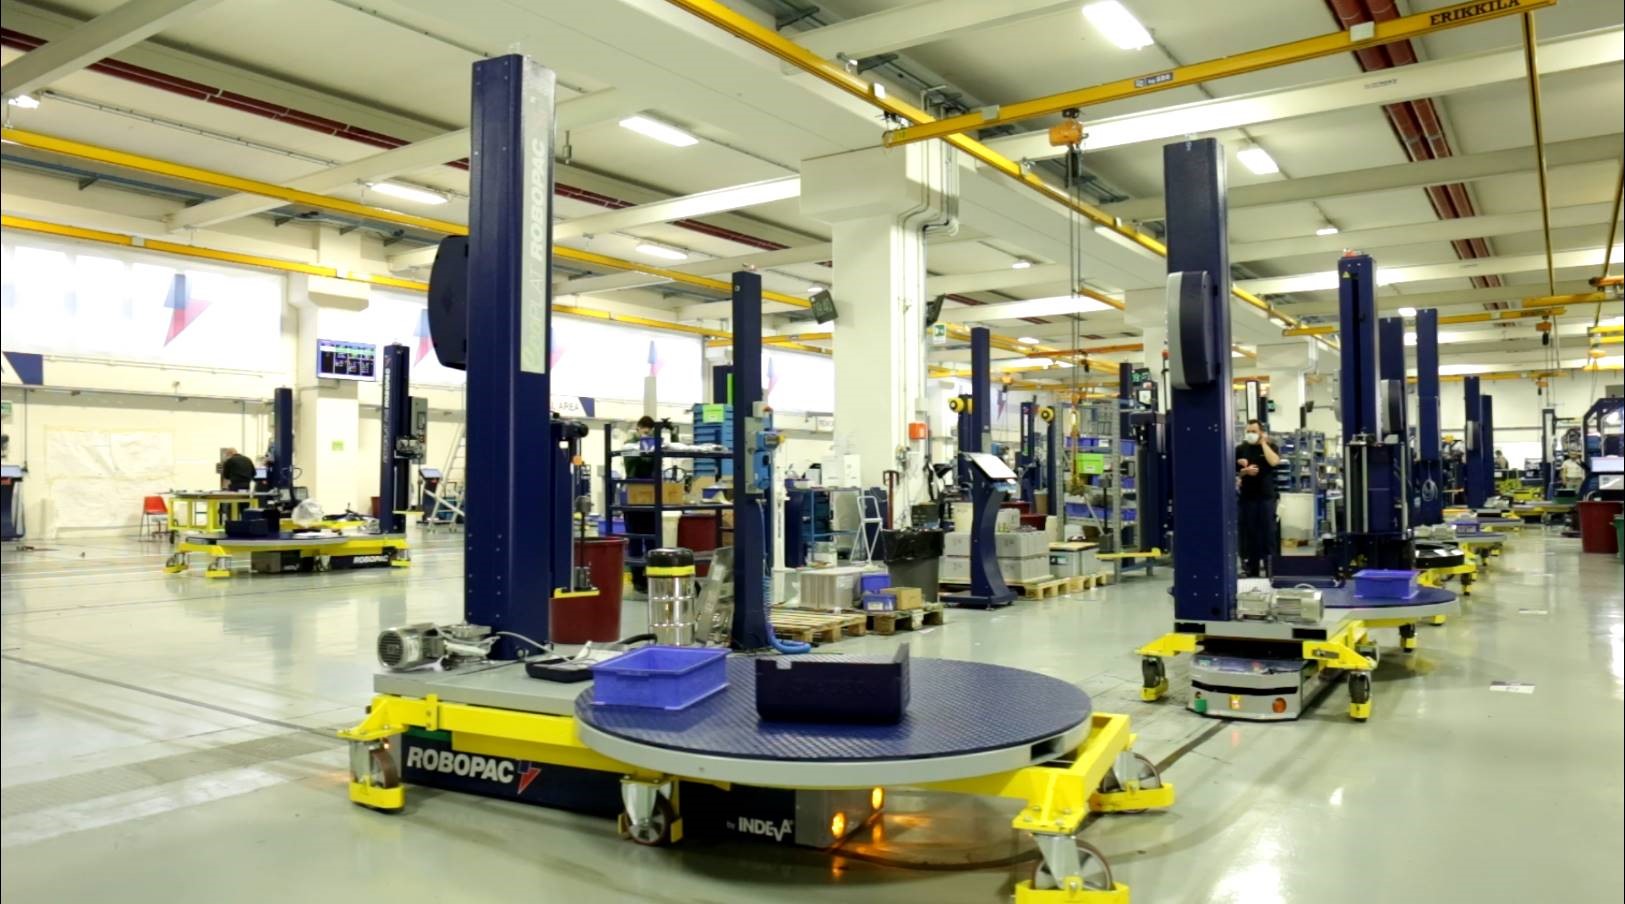 Image of Robopacs shopfloor. Robopac increased production capacity with Opcenter.